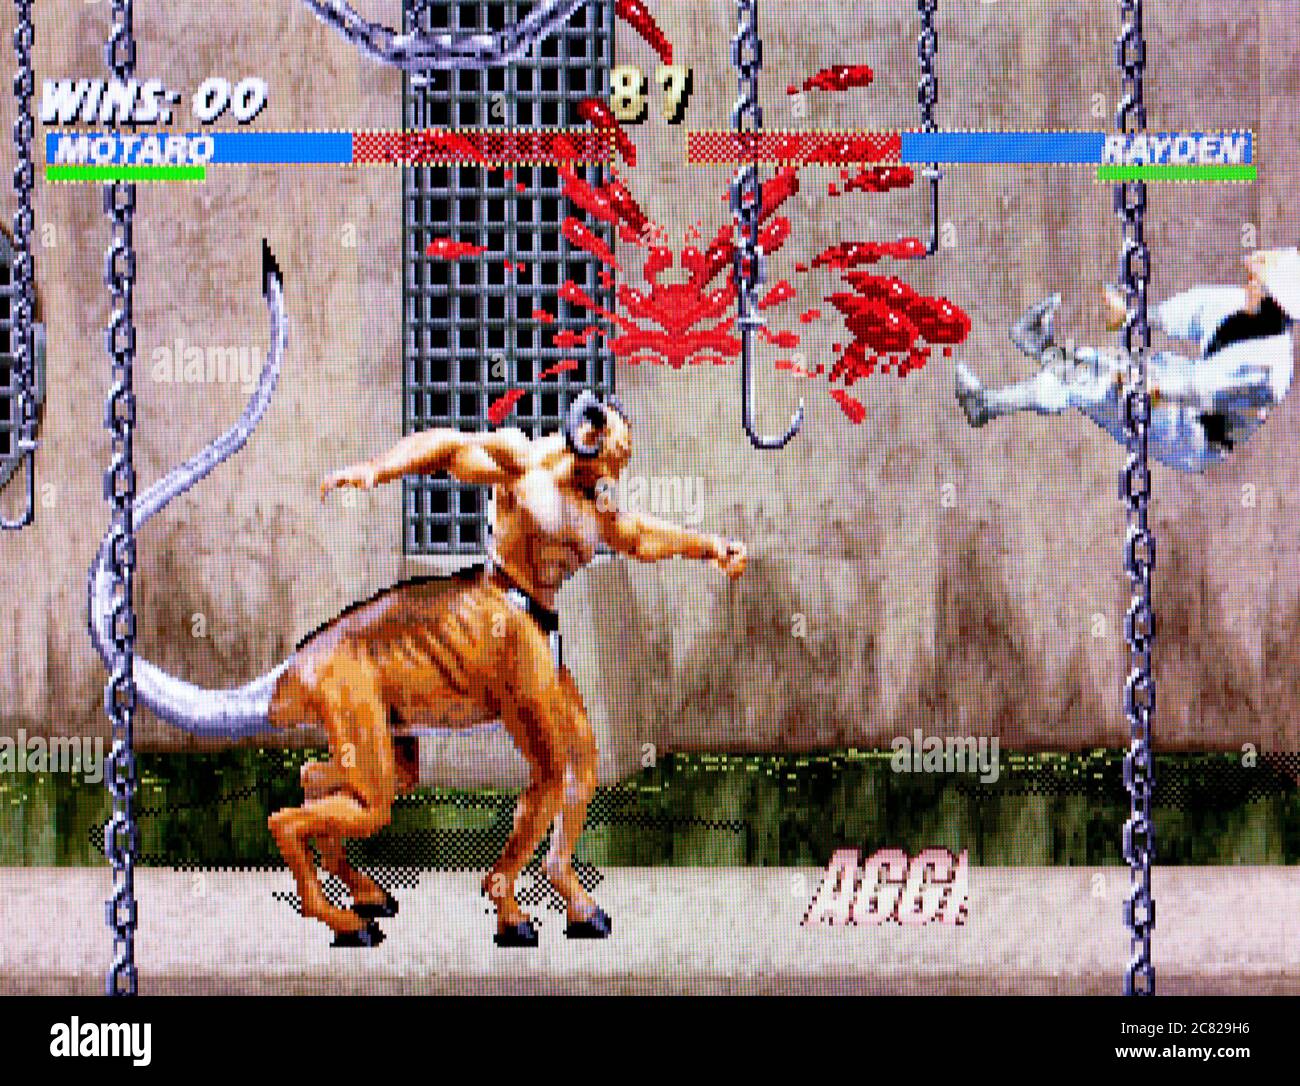 Mortal kombat 1995 hi-res stock photography and images - Alamy